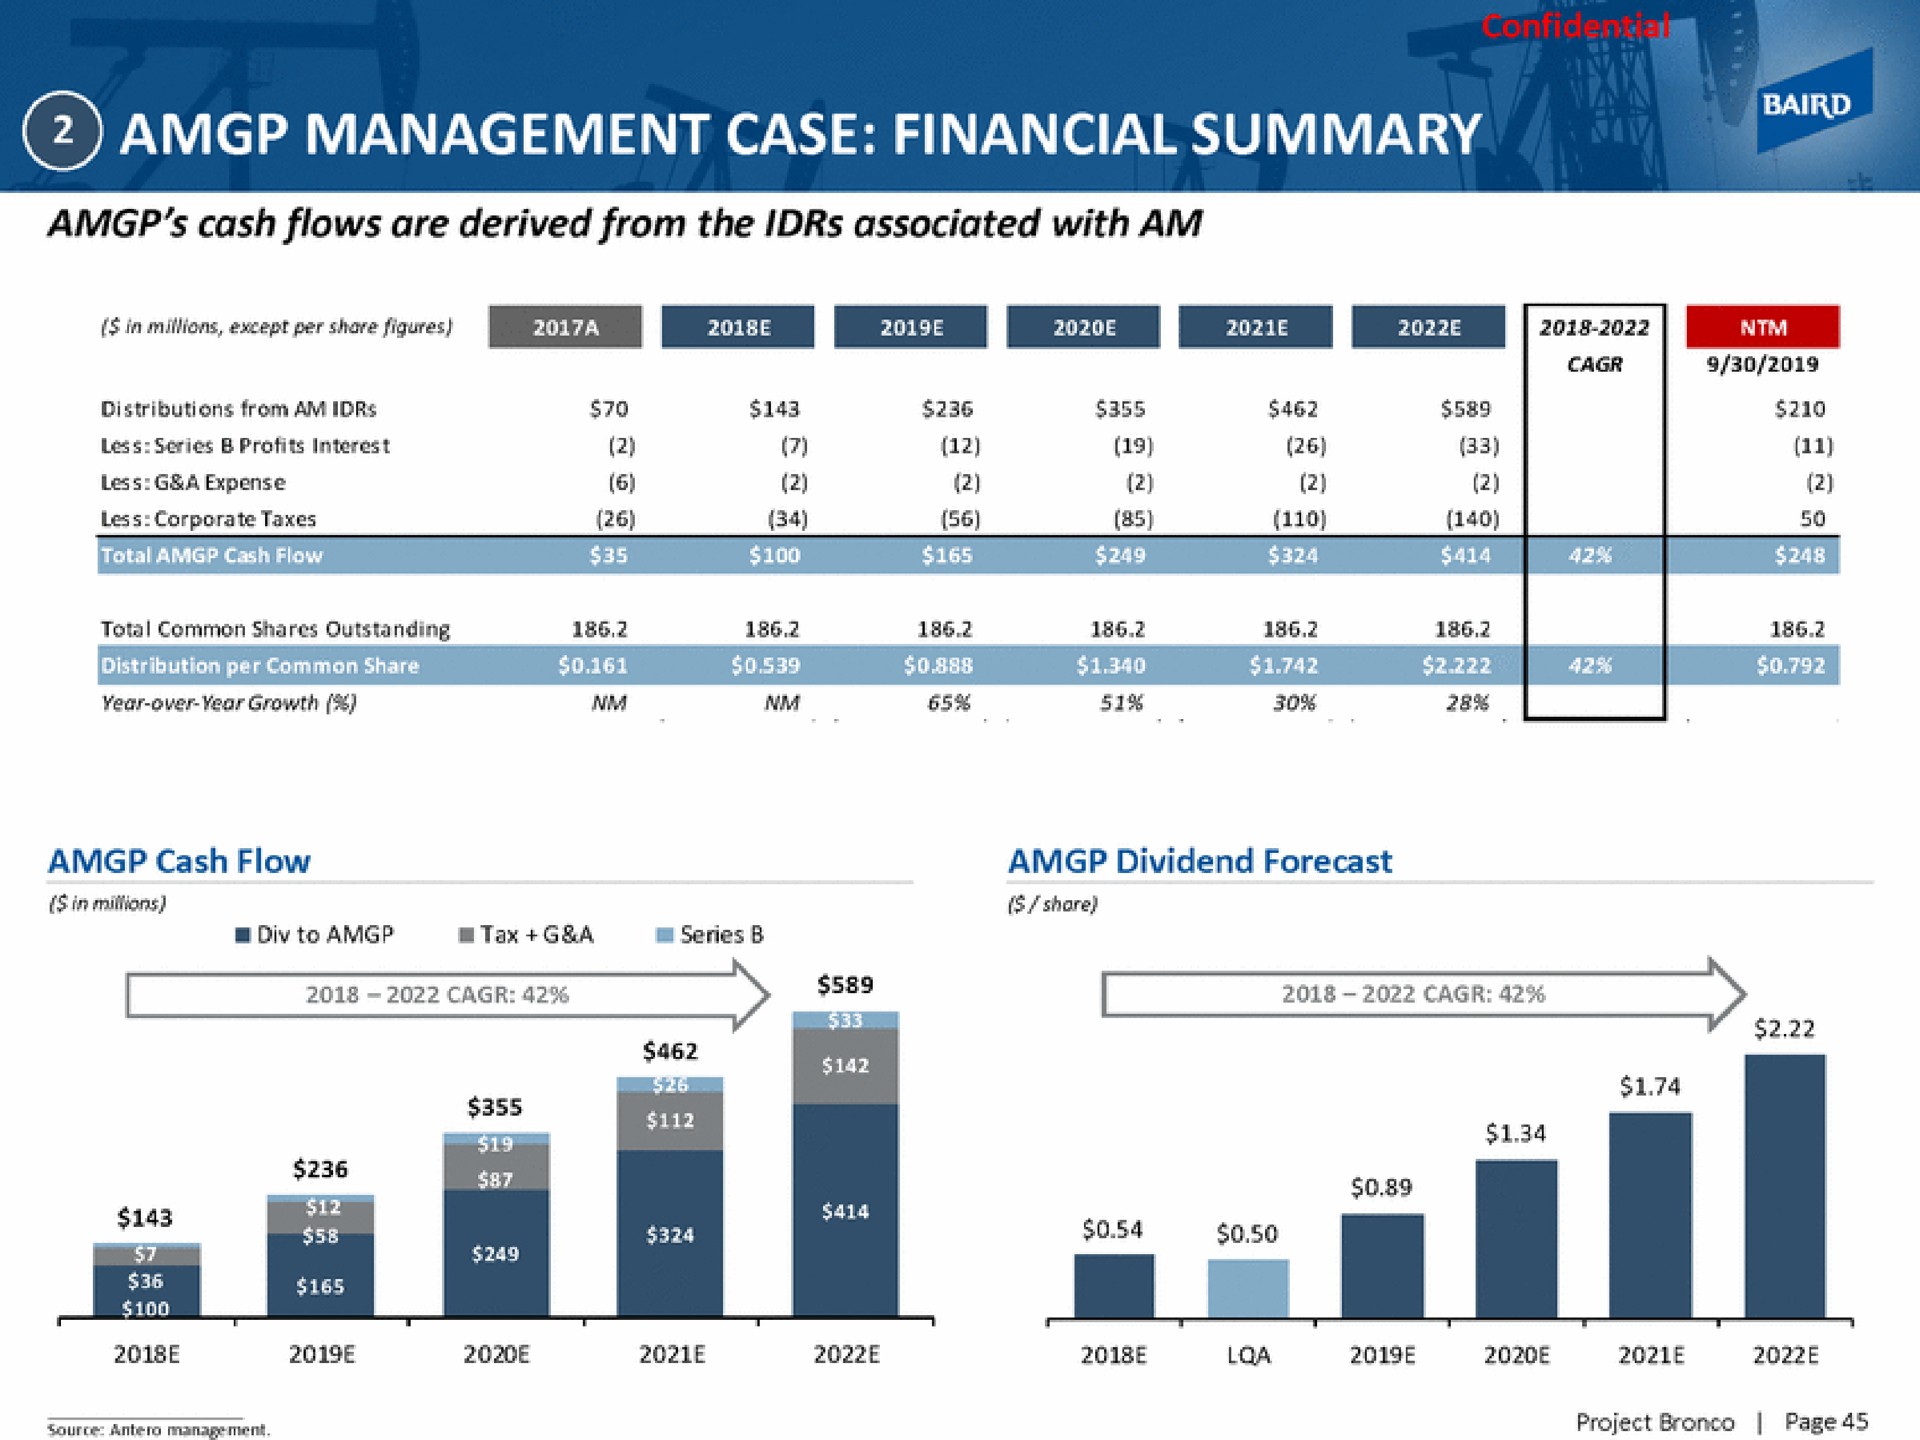 management case financial summary | Baird